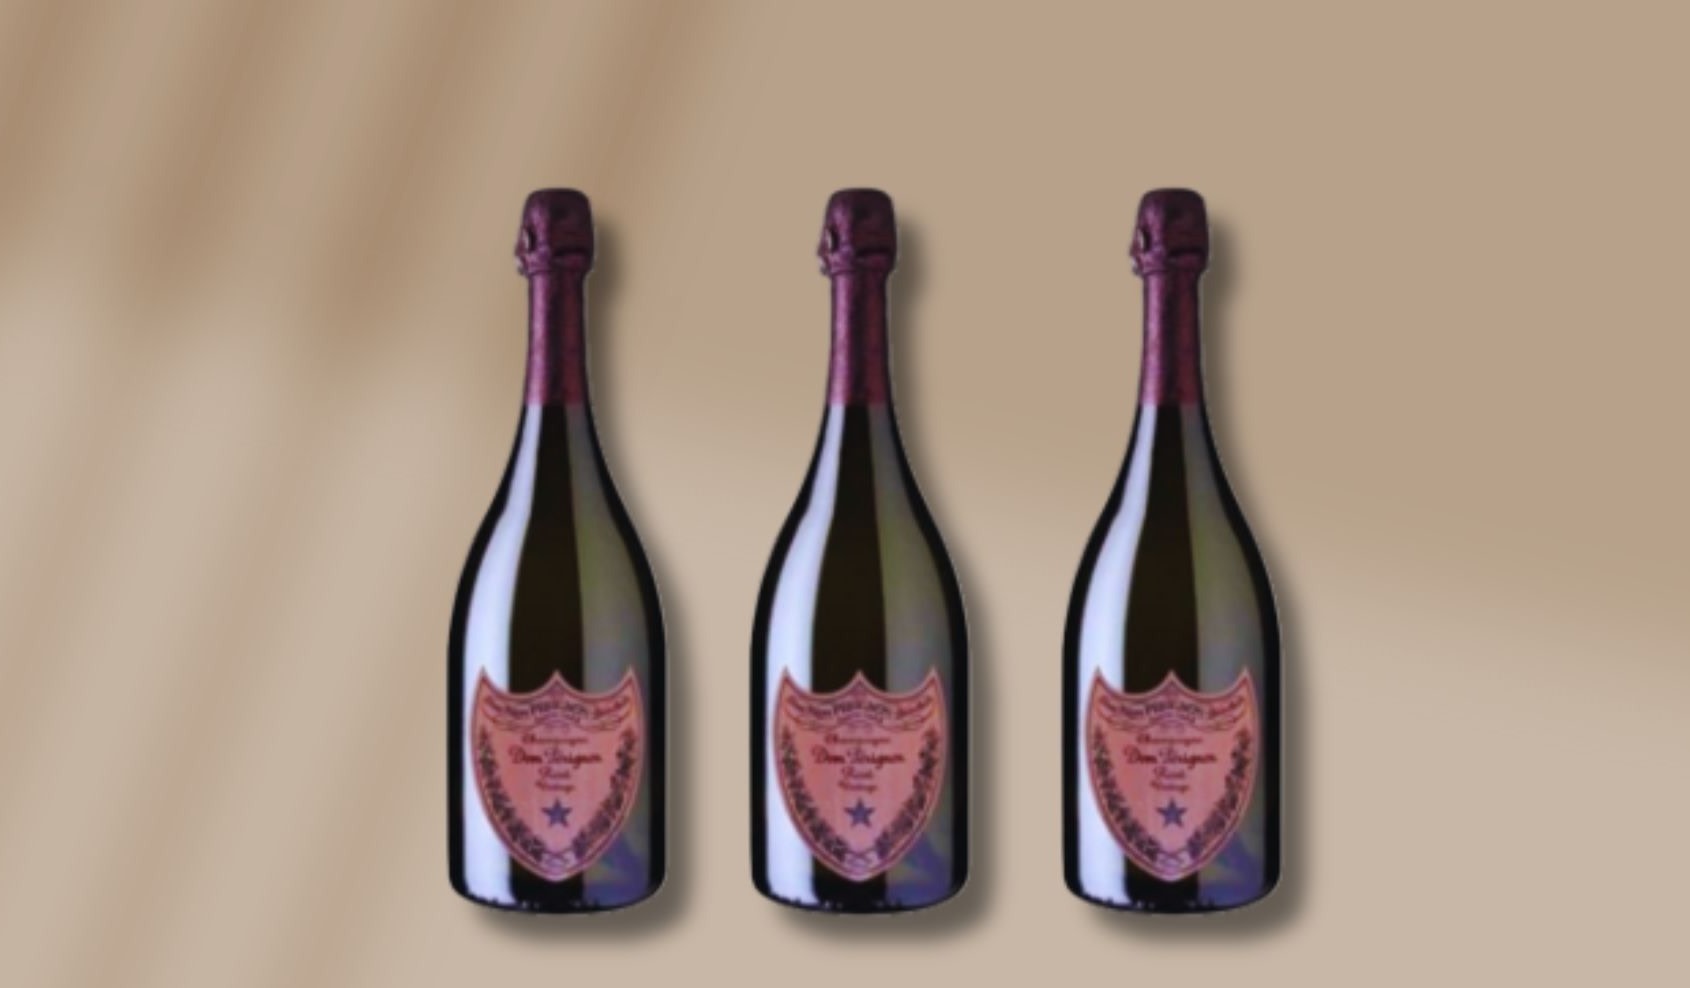 Buy Dom Perignon Brut Champagne Online!